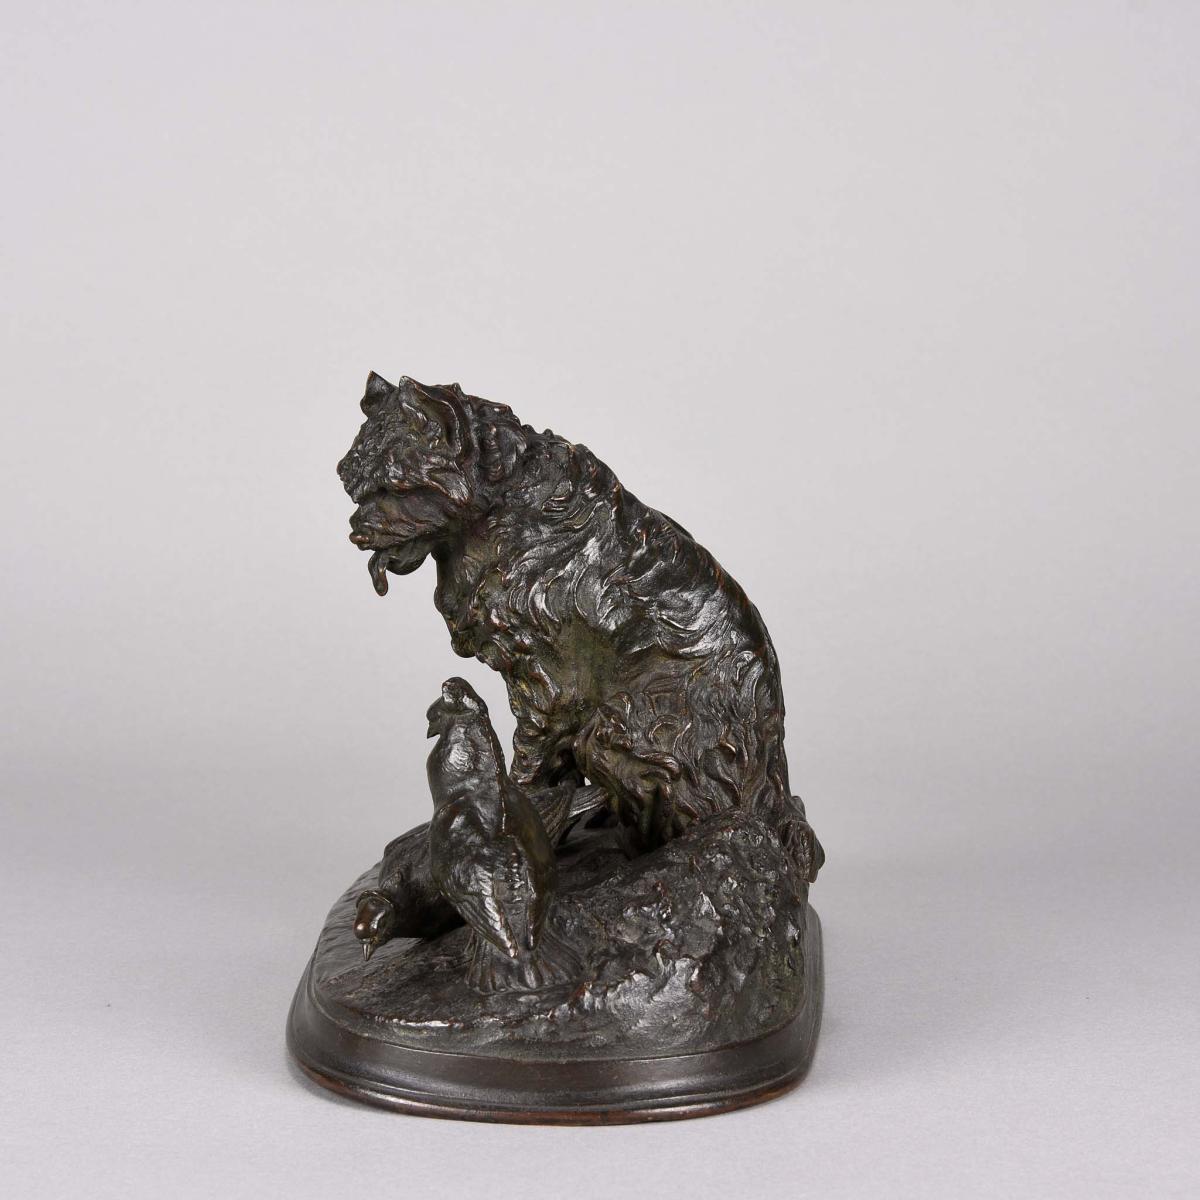 19th Century Animalier Bronze entitled "Chien et Pigeon" by Pierre Jules Mêne